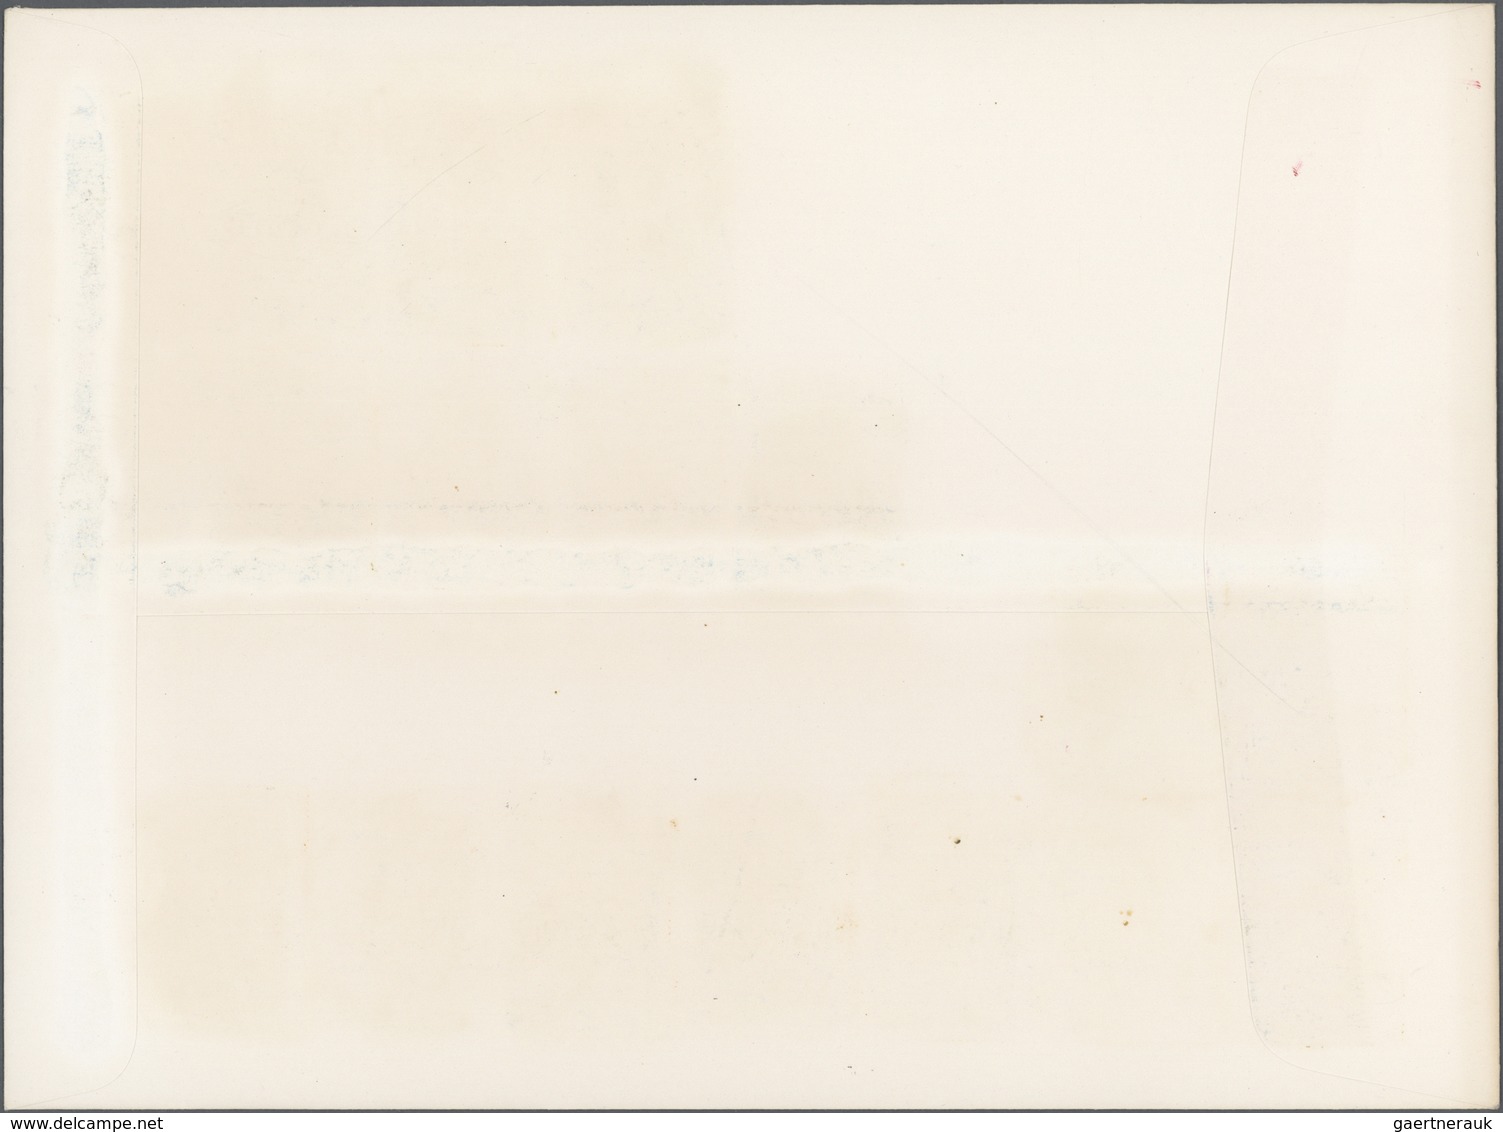 08526 Fudschaira / Fujeira: 1969, Moon Landing overprints, perf./imperf. issues, three sets of nine values